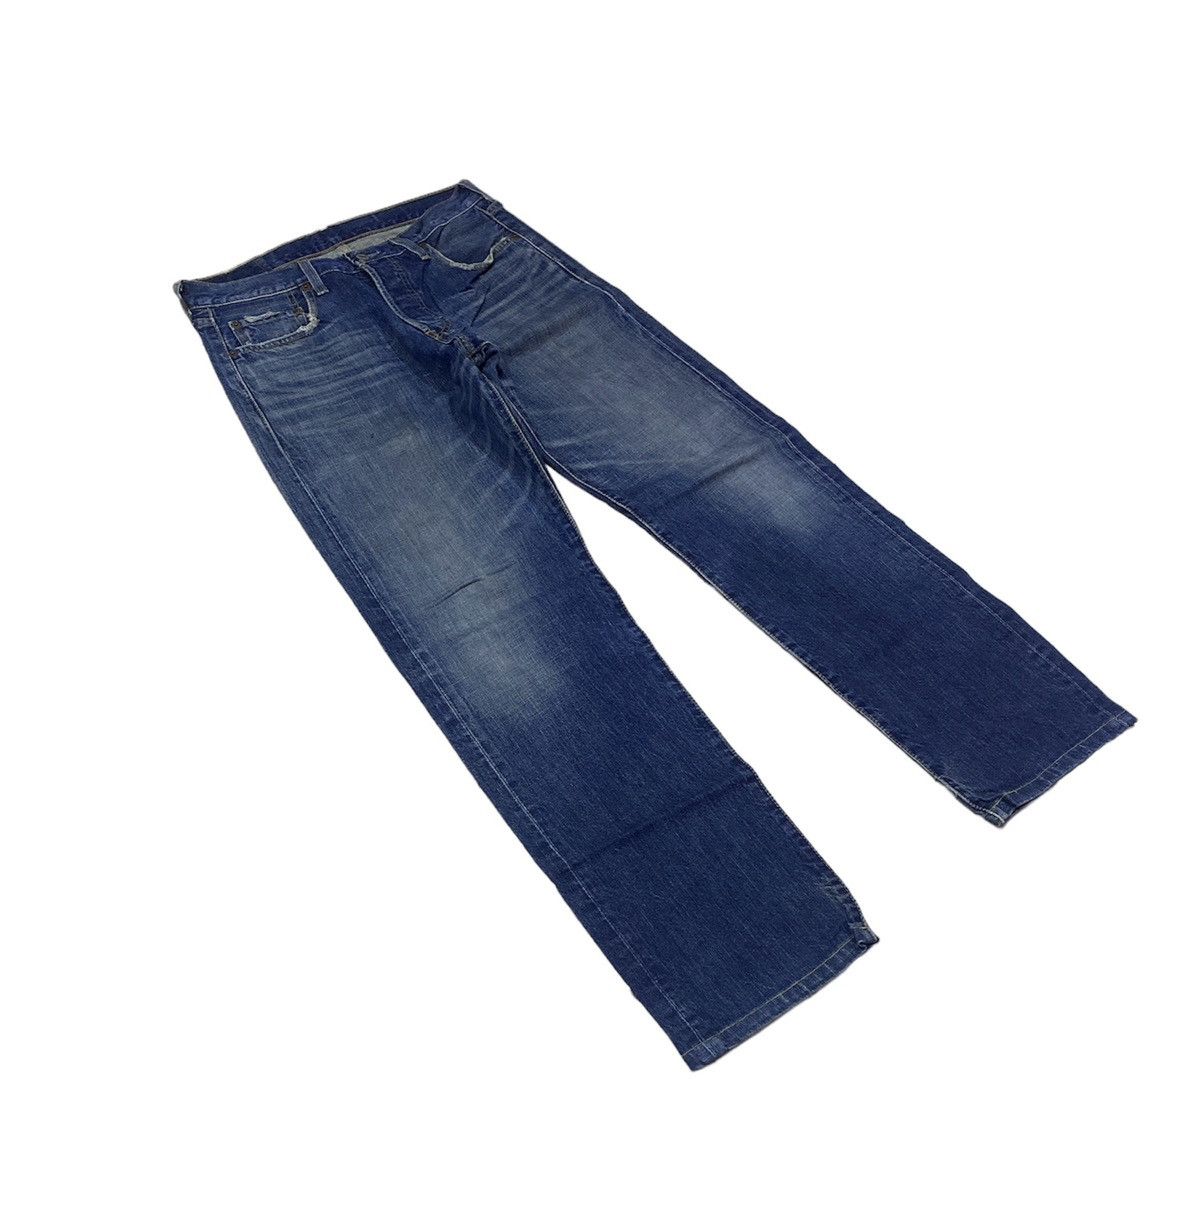 Levi’s San Francisco 501 Denim Jeans - 1